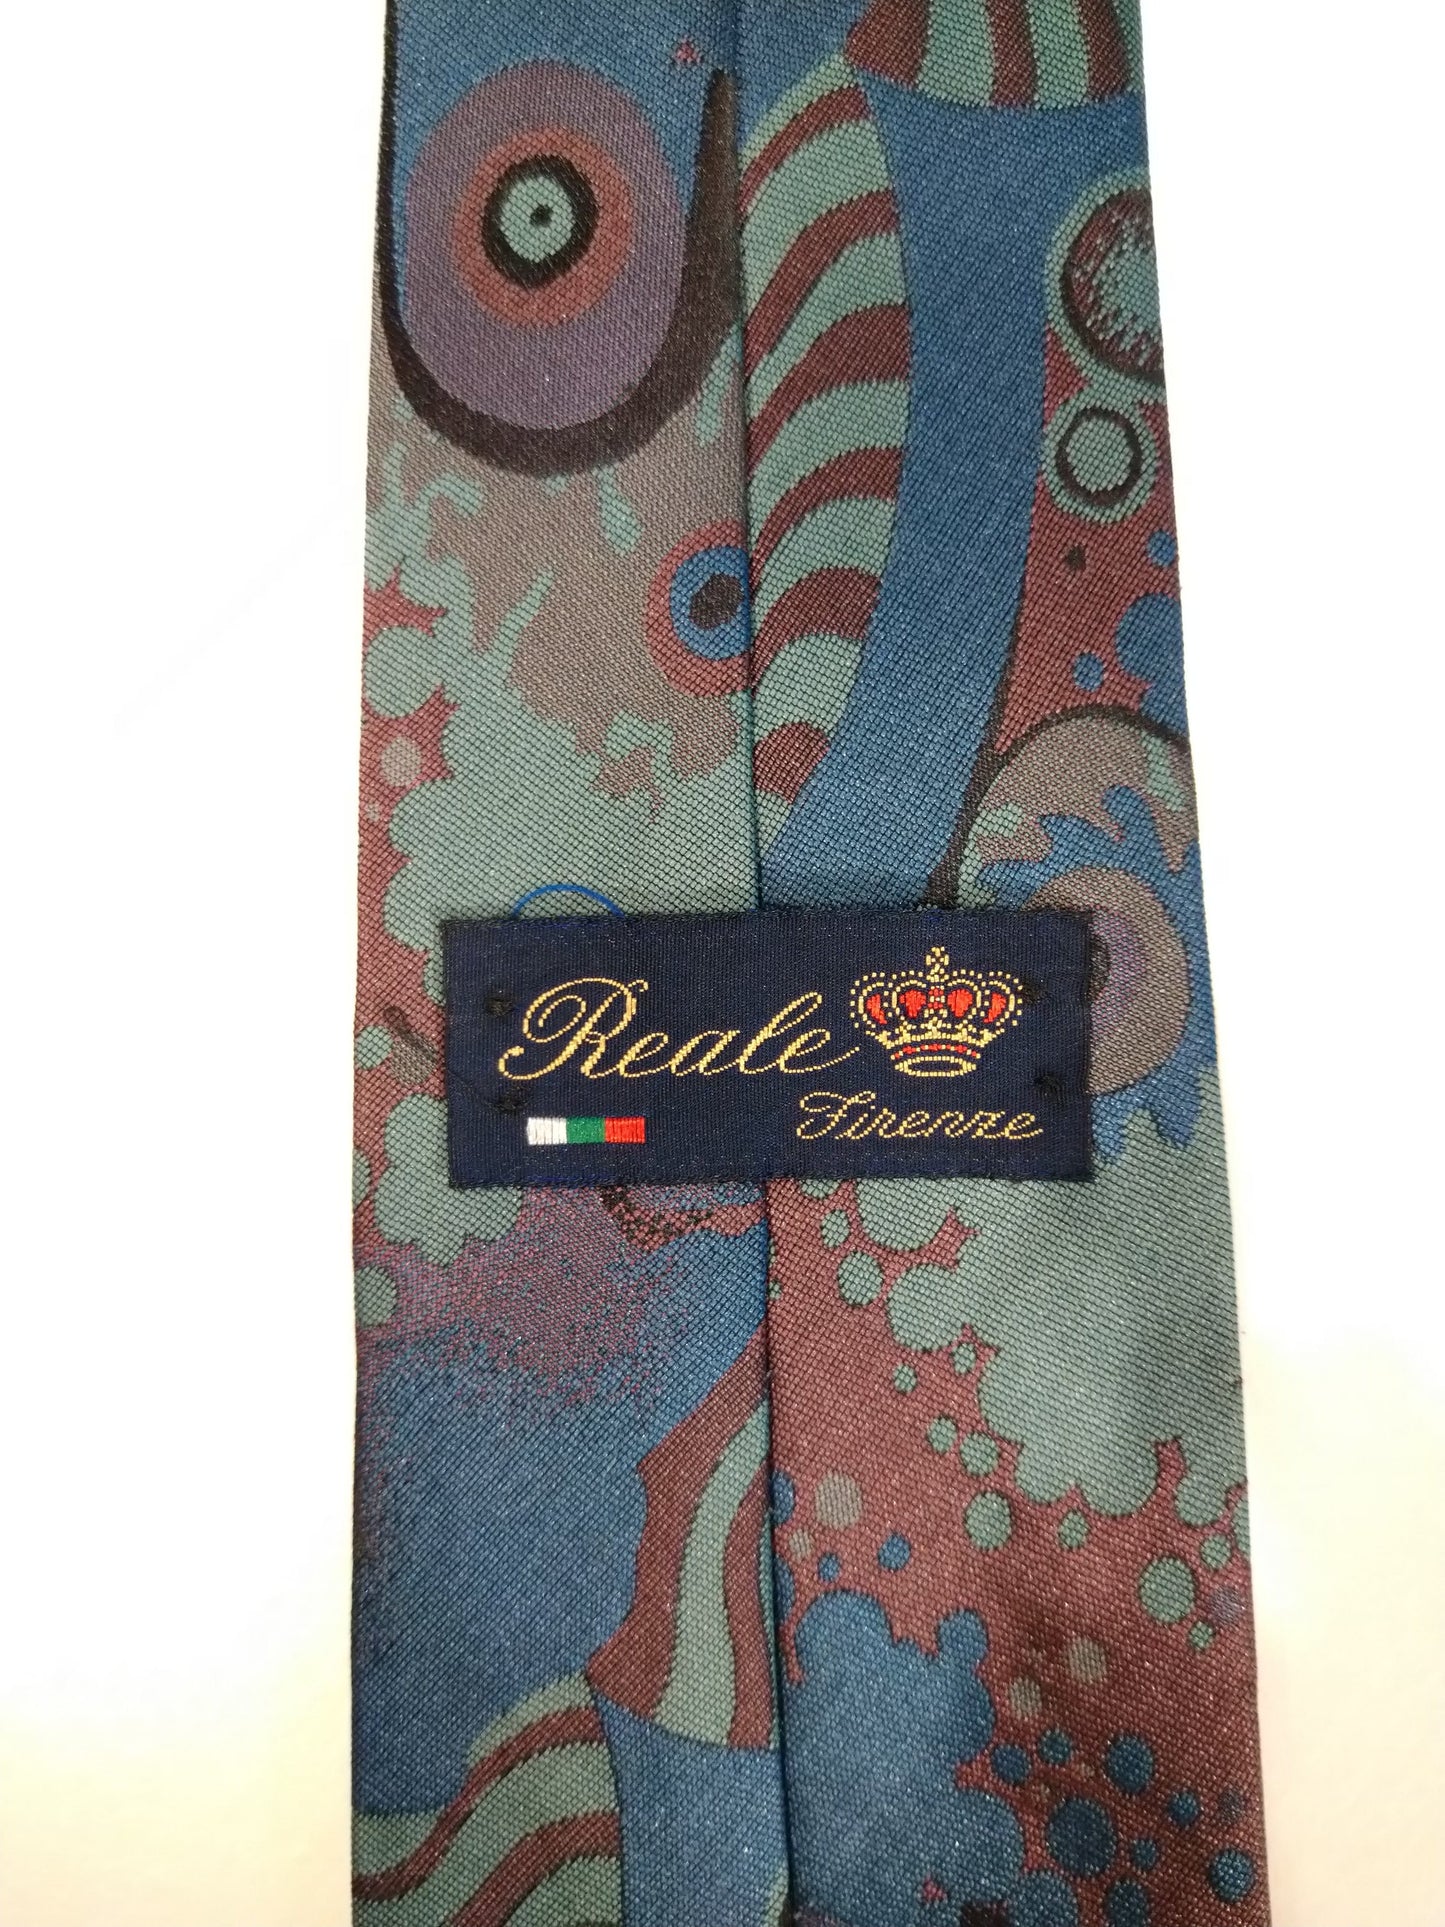 Reale Firenze corbata. Motivo rojo azul